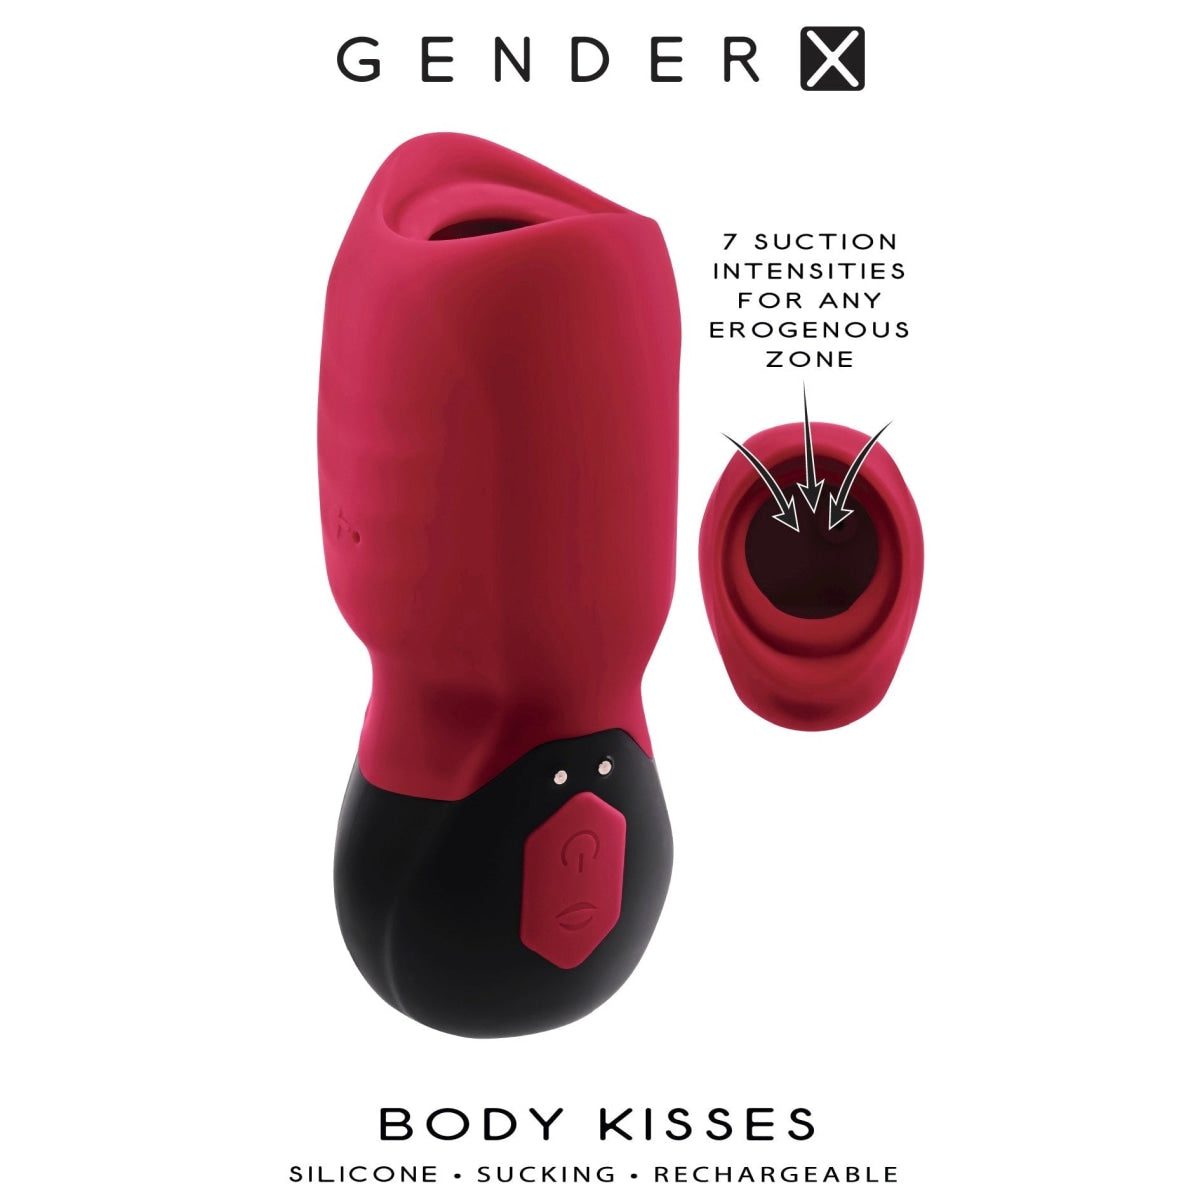 Gender X Body Kisses Intimates Adult Boutique